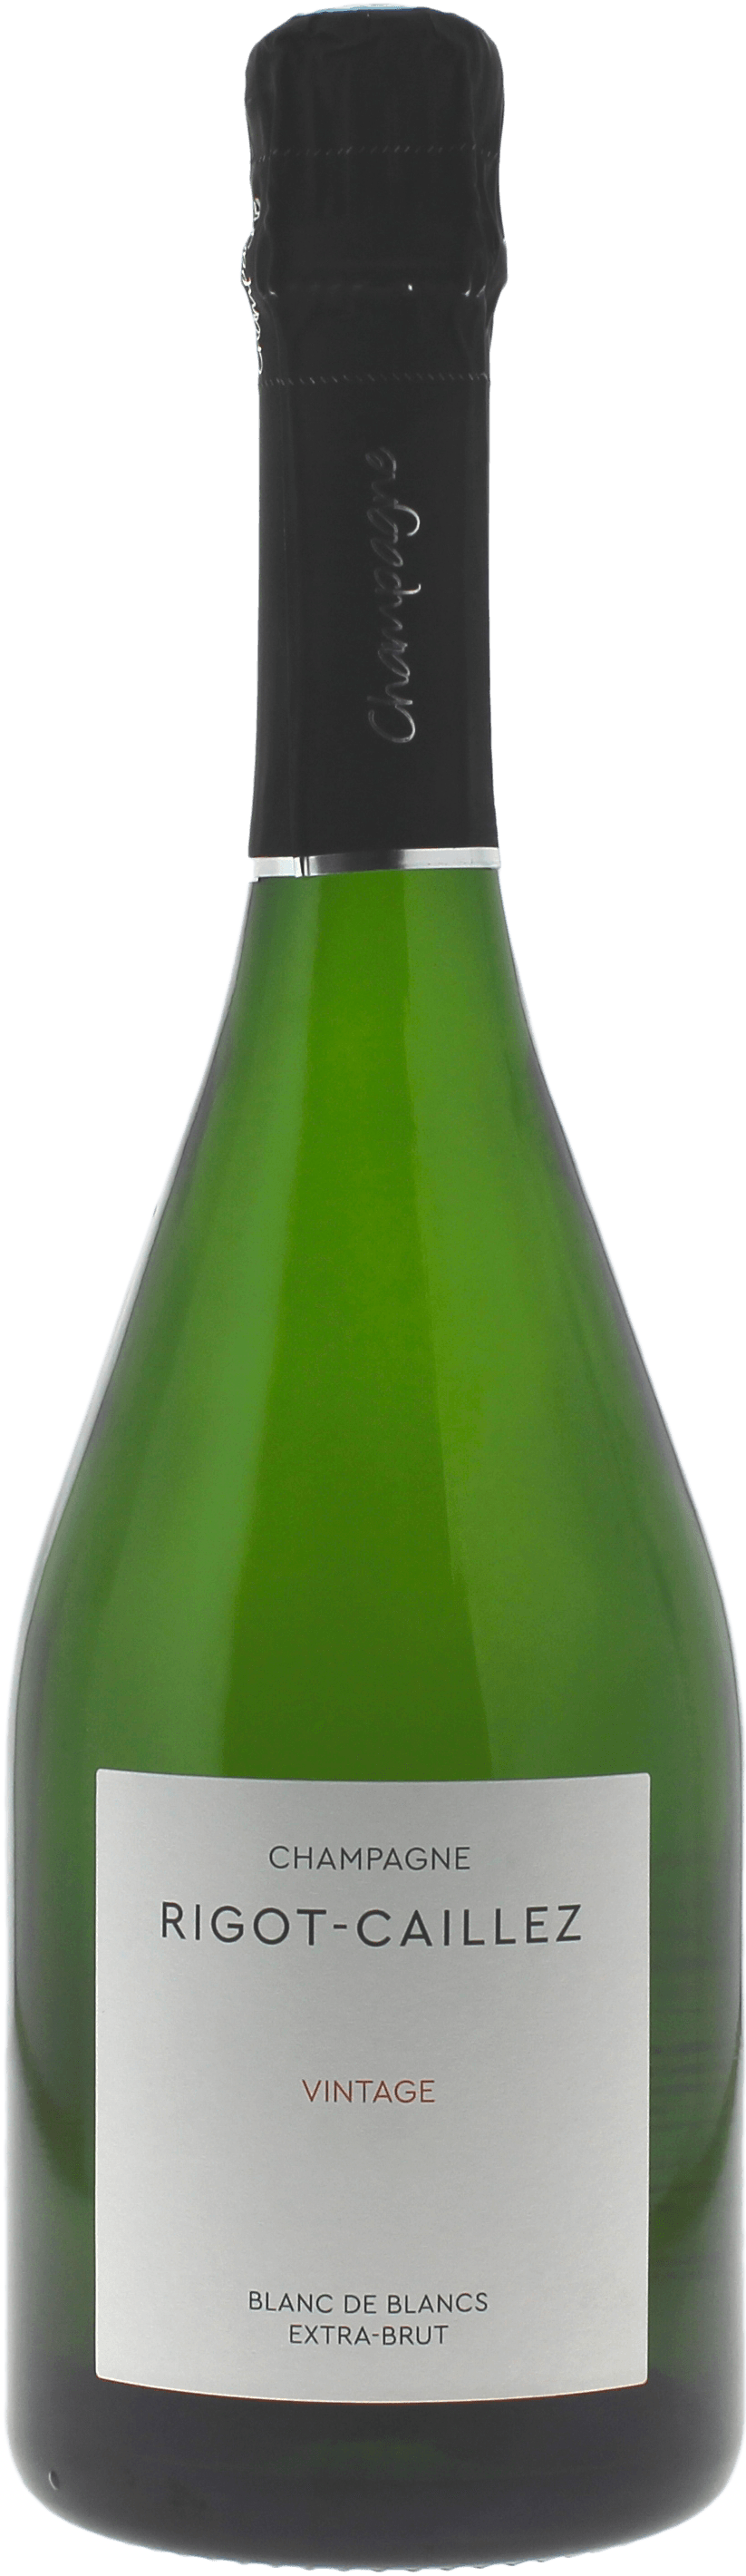 Rigot-caillez blanc de blancs extra brut 2008  Rigot Caillez, Champagne